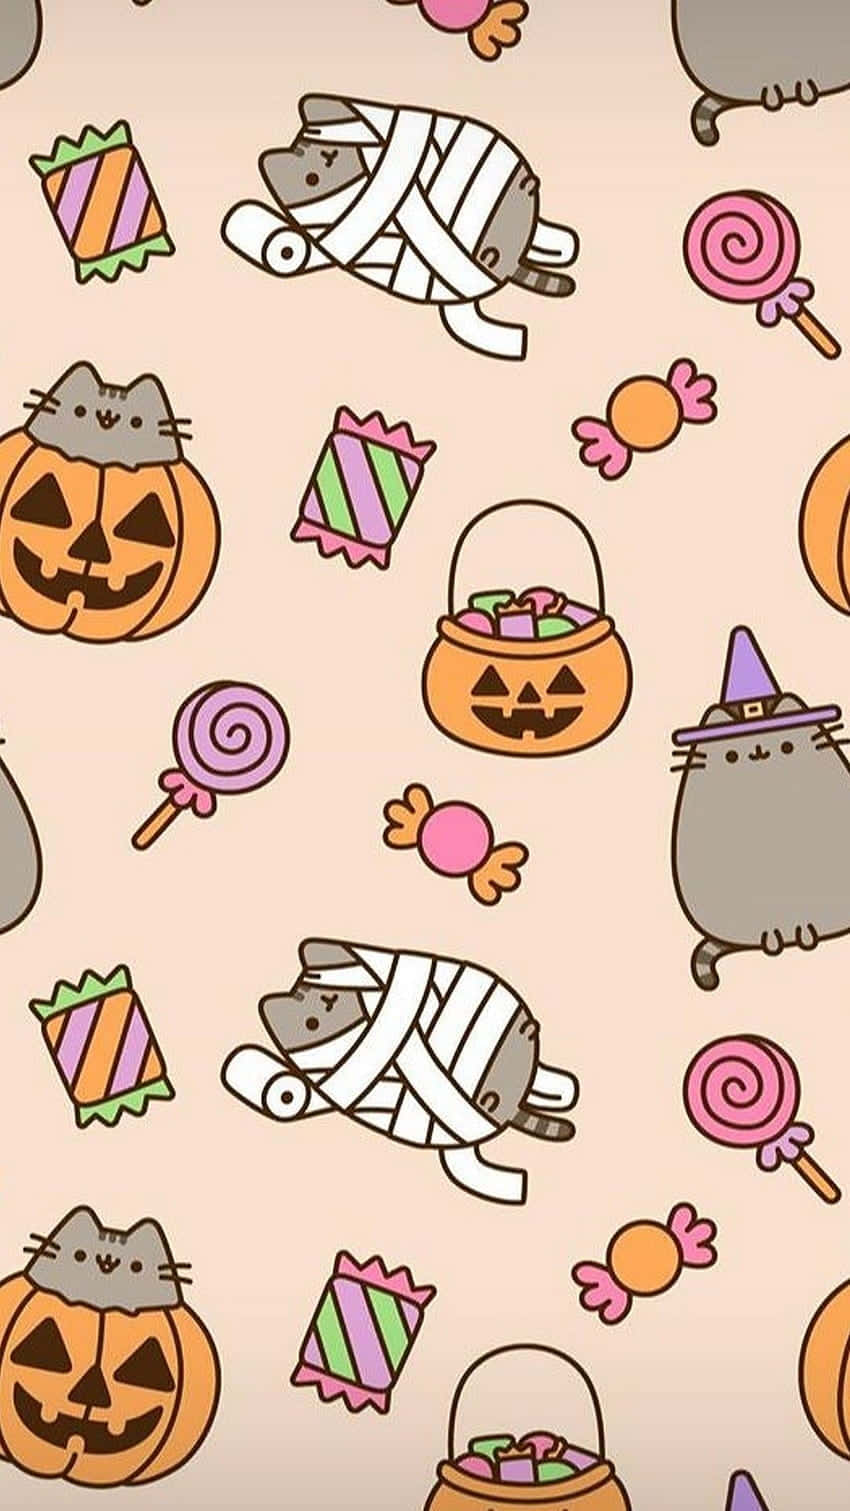 100+] Cute Aesthetic Halloween Background s 